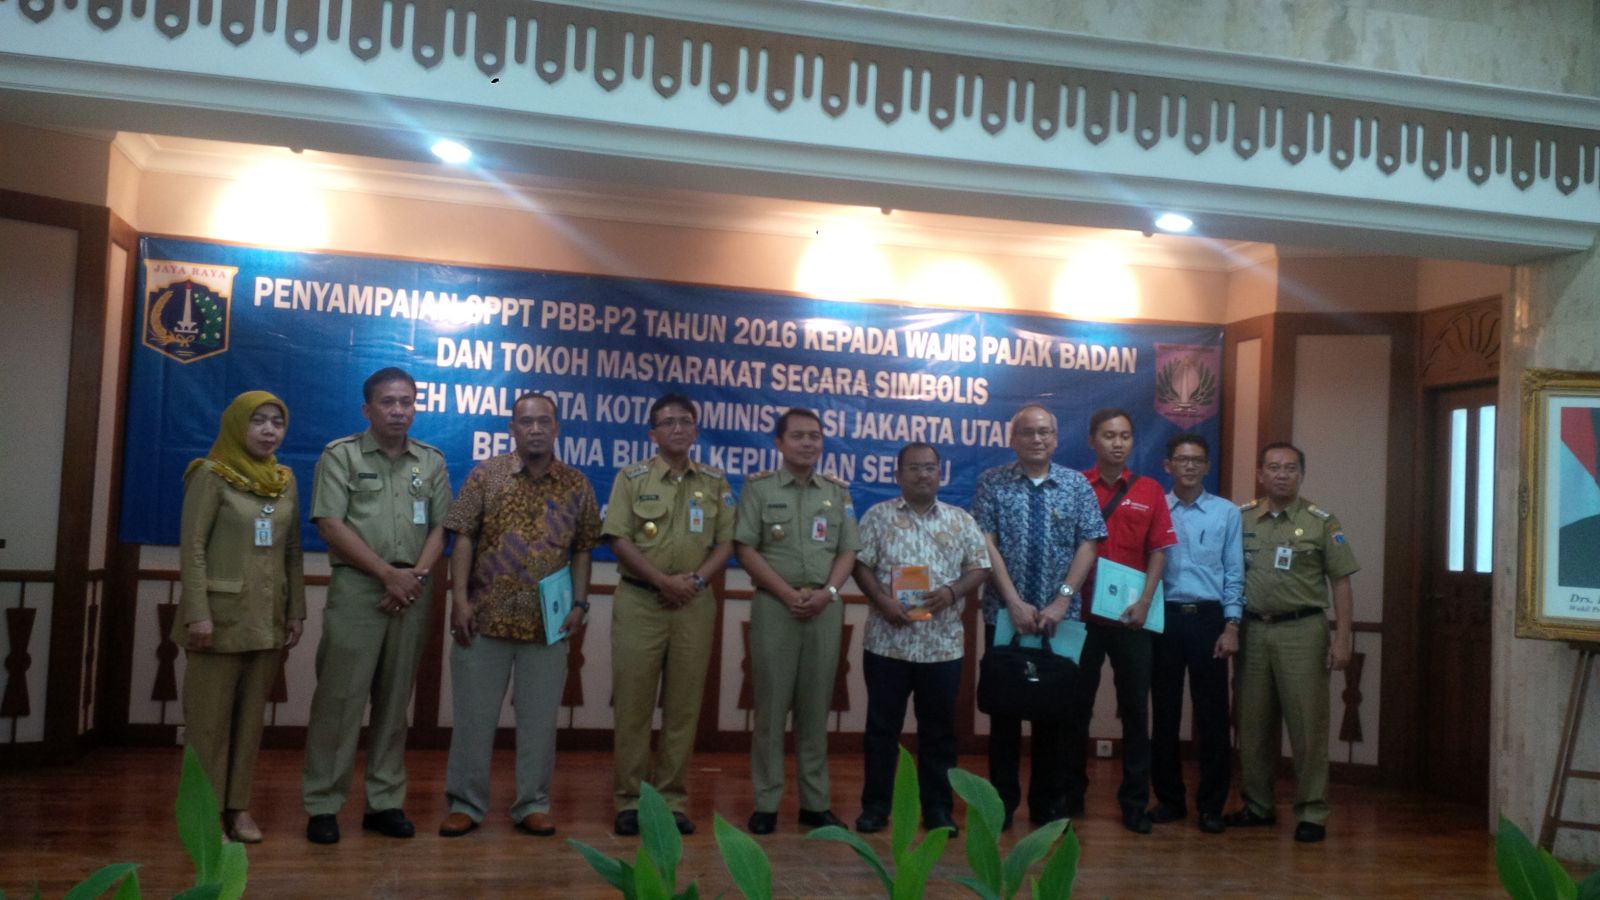 Penyampaian SPPT PBB di Walikota Utara dan Kabupaten Kepulauan Seribu